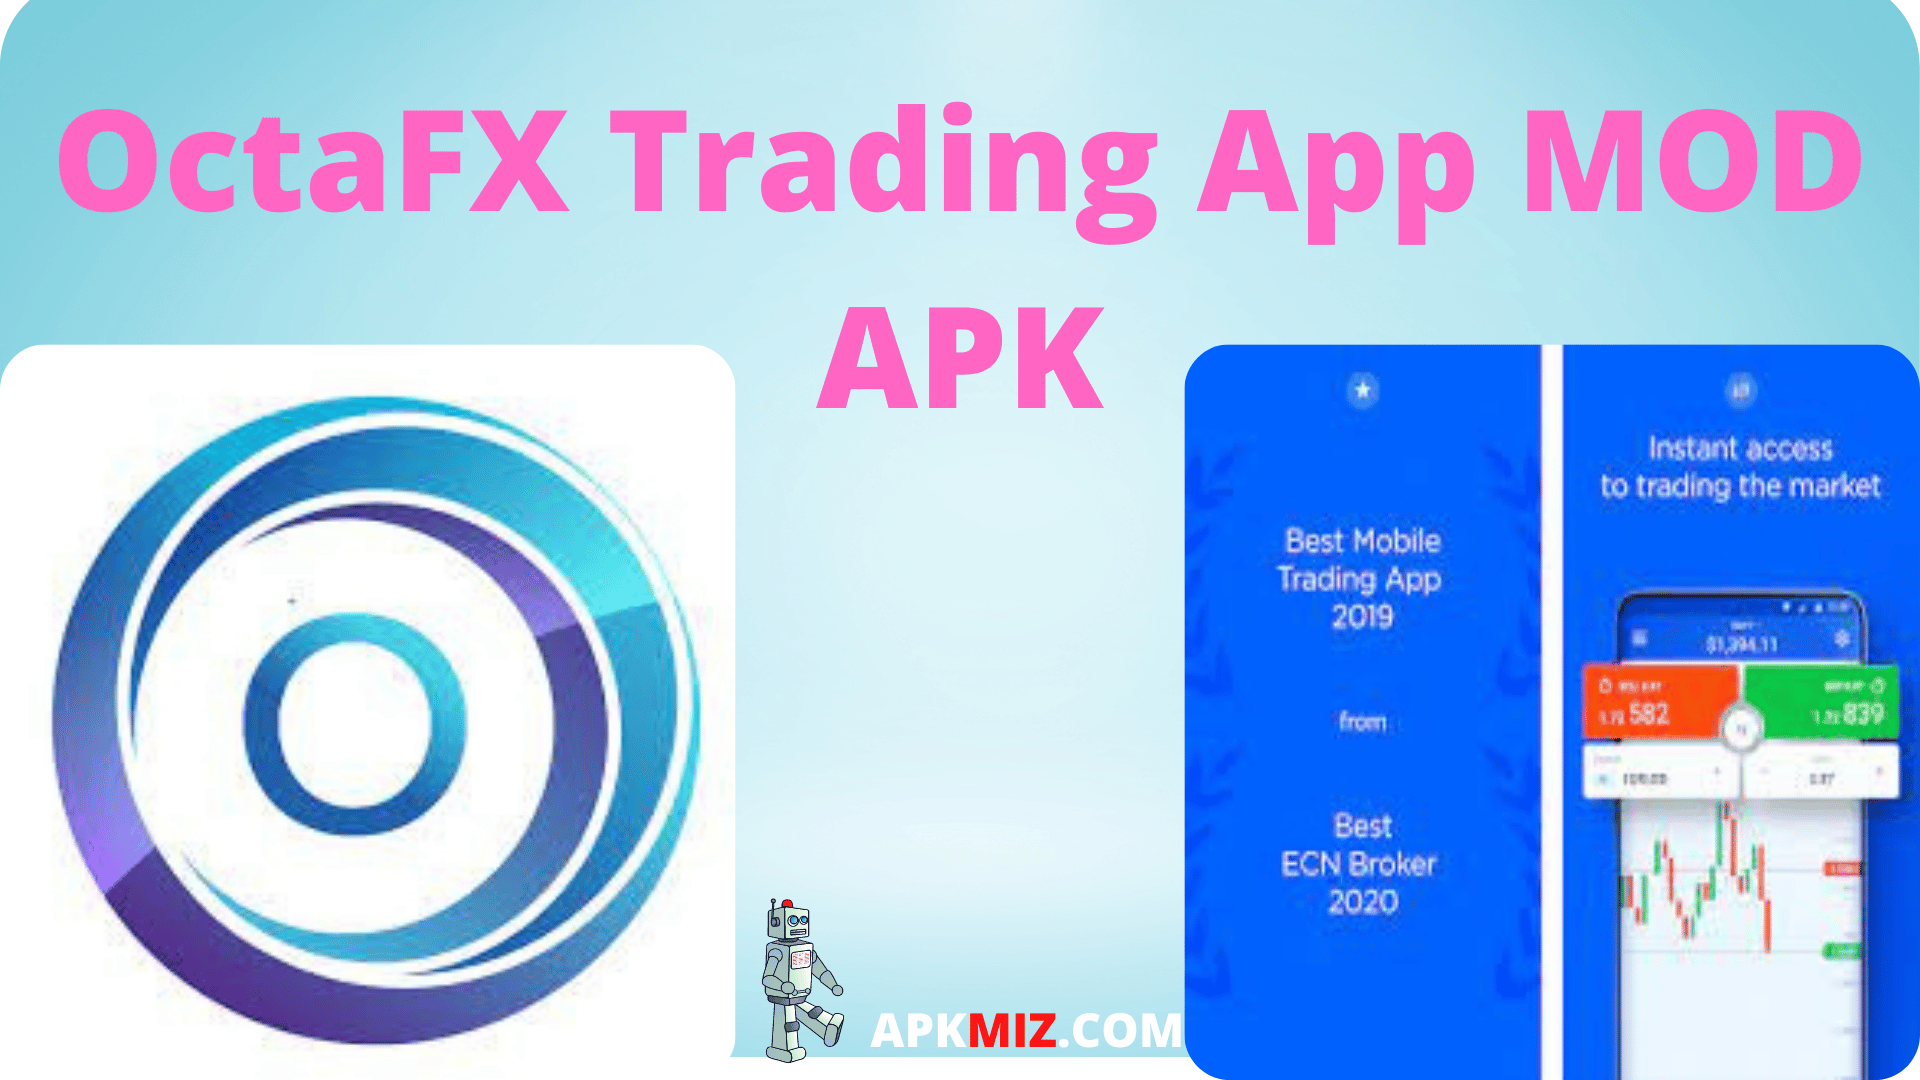 OctaFX Trading App MOD APK